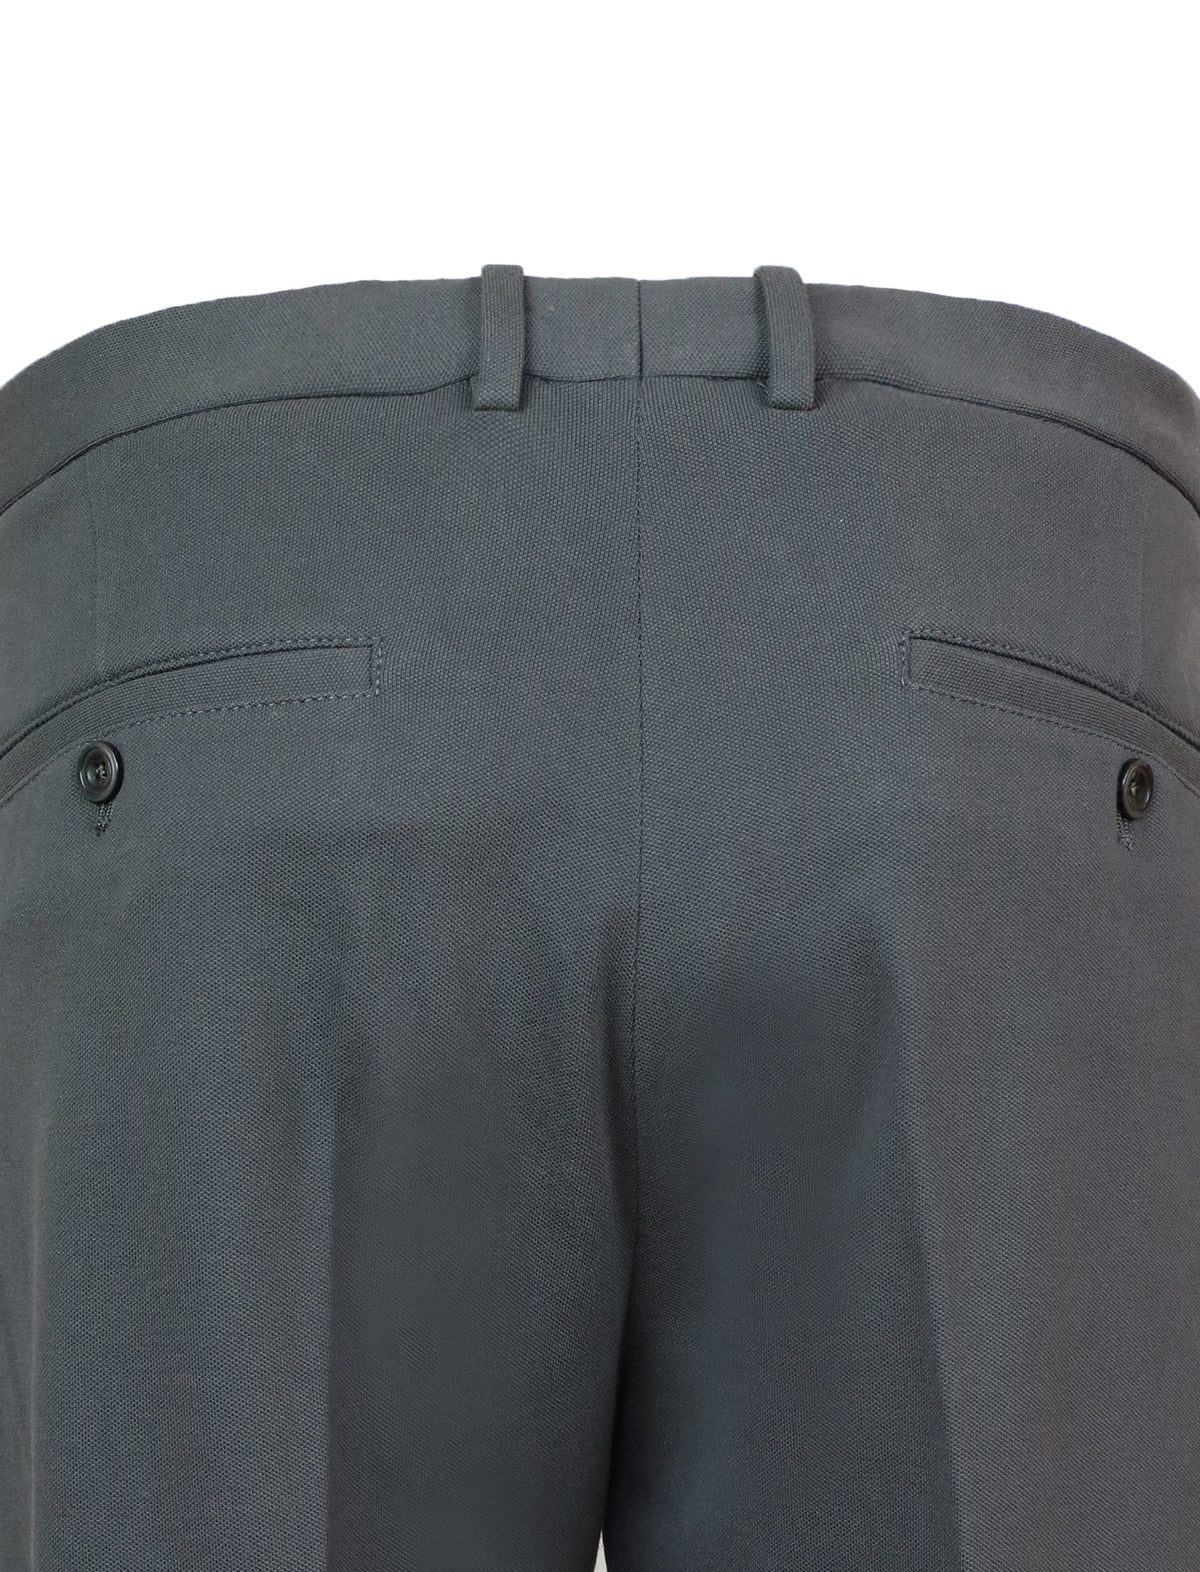 CIRCOLO 1901 Tailored Pants in Dark Grey